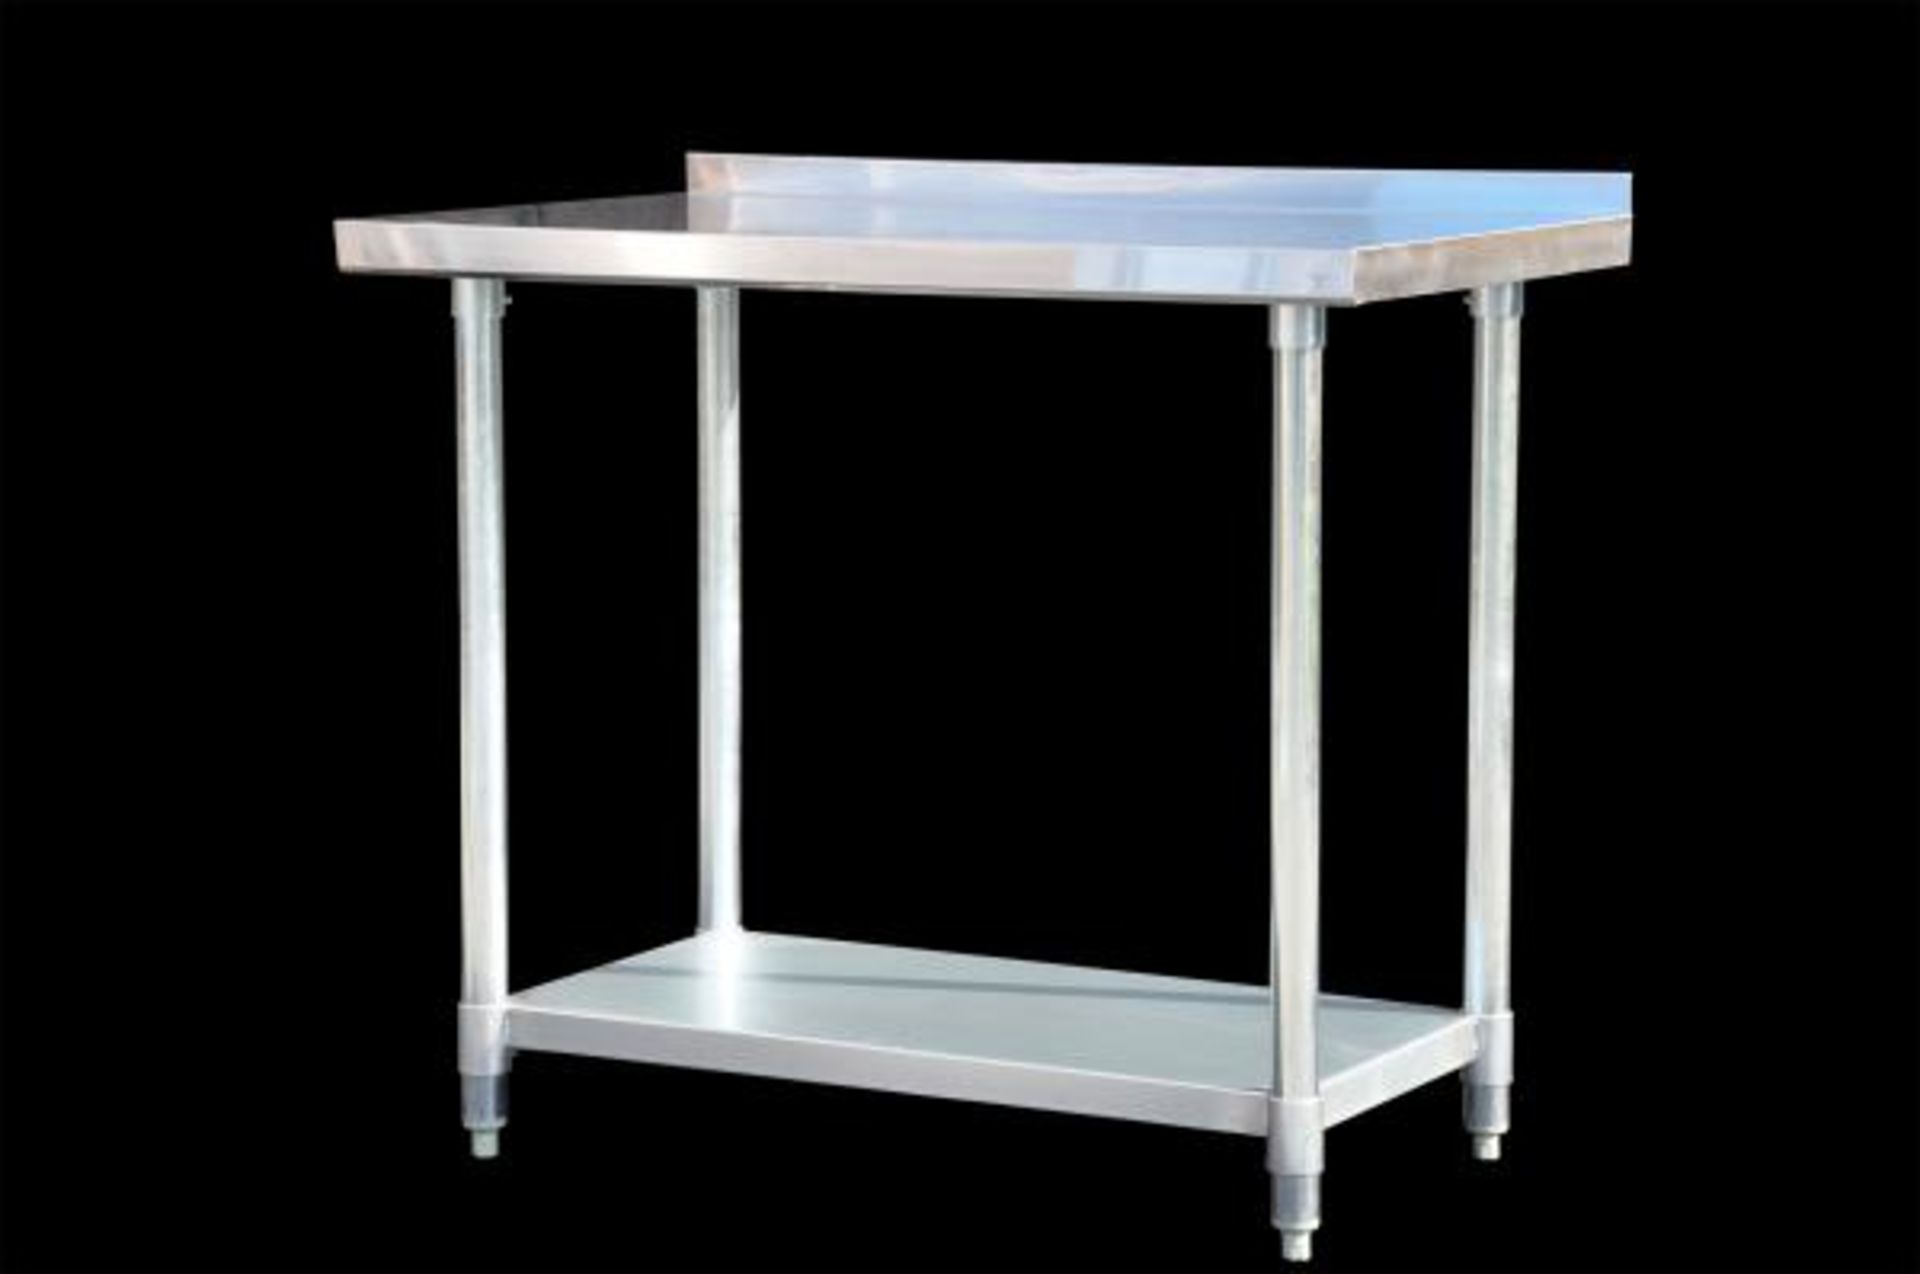 Stainless steel worktable with back splash. adjustable nylon feet, flat pack, superb quality 1000